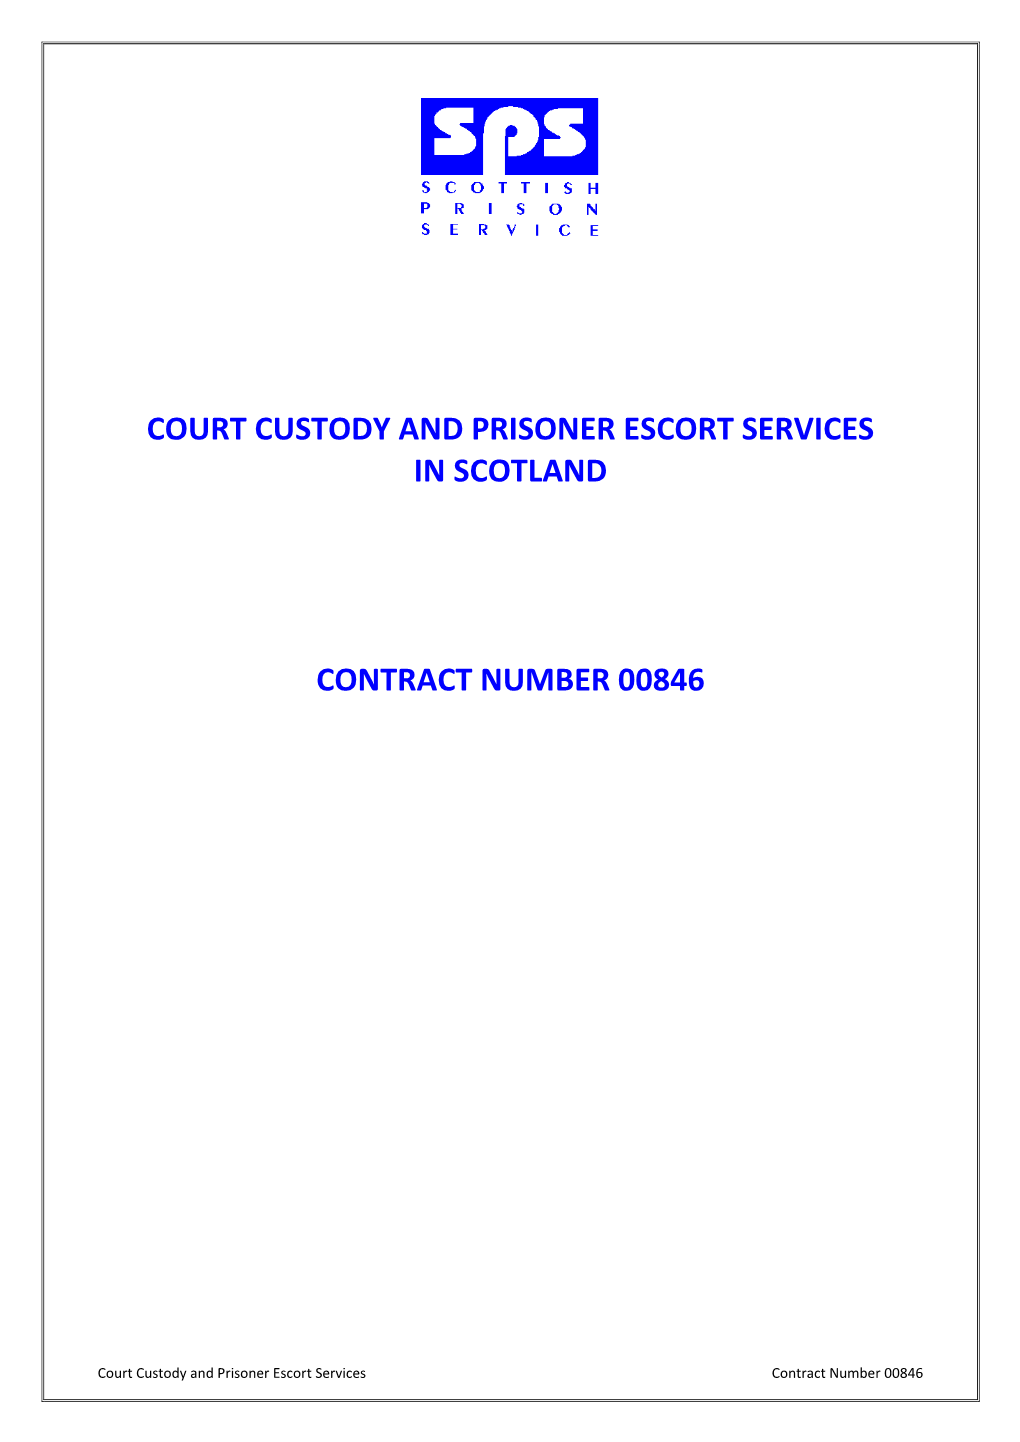 Court Custody and Prisoner Escort Services in Scotland